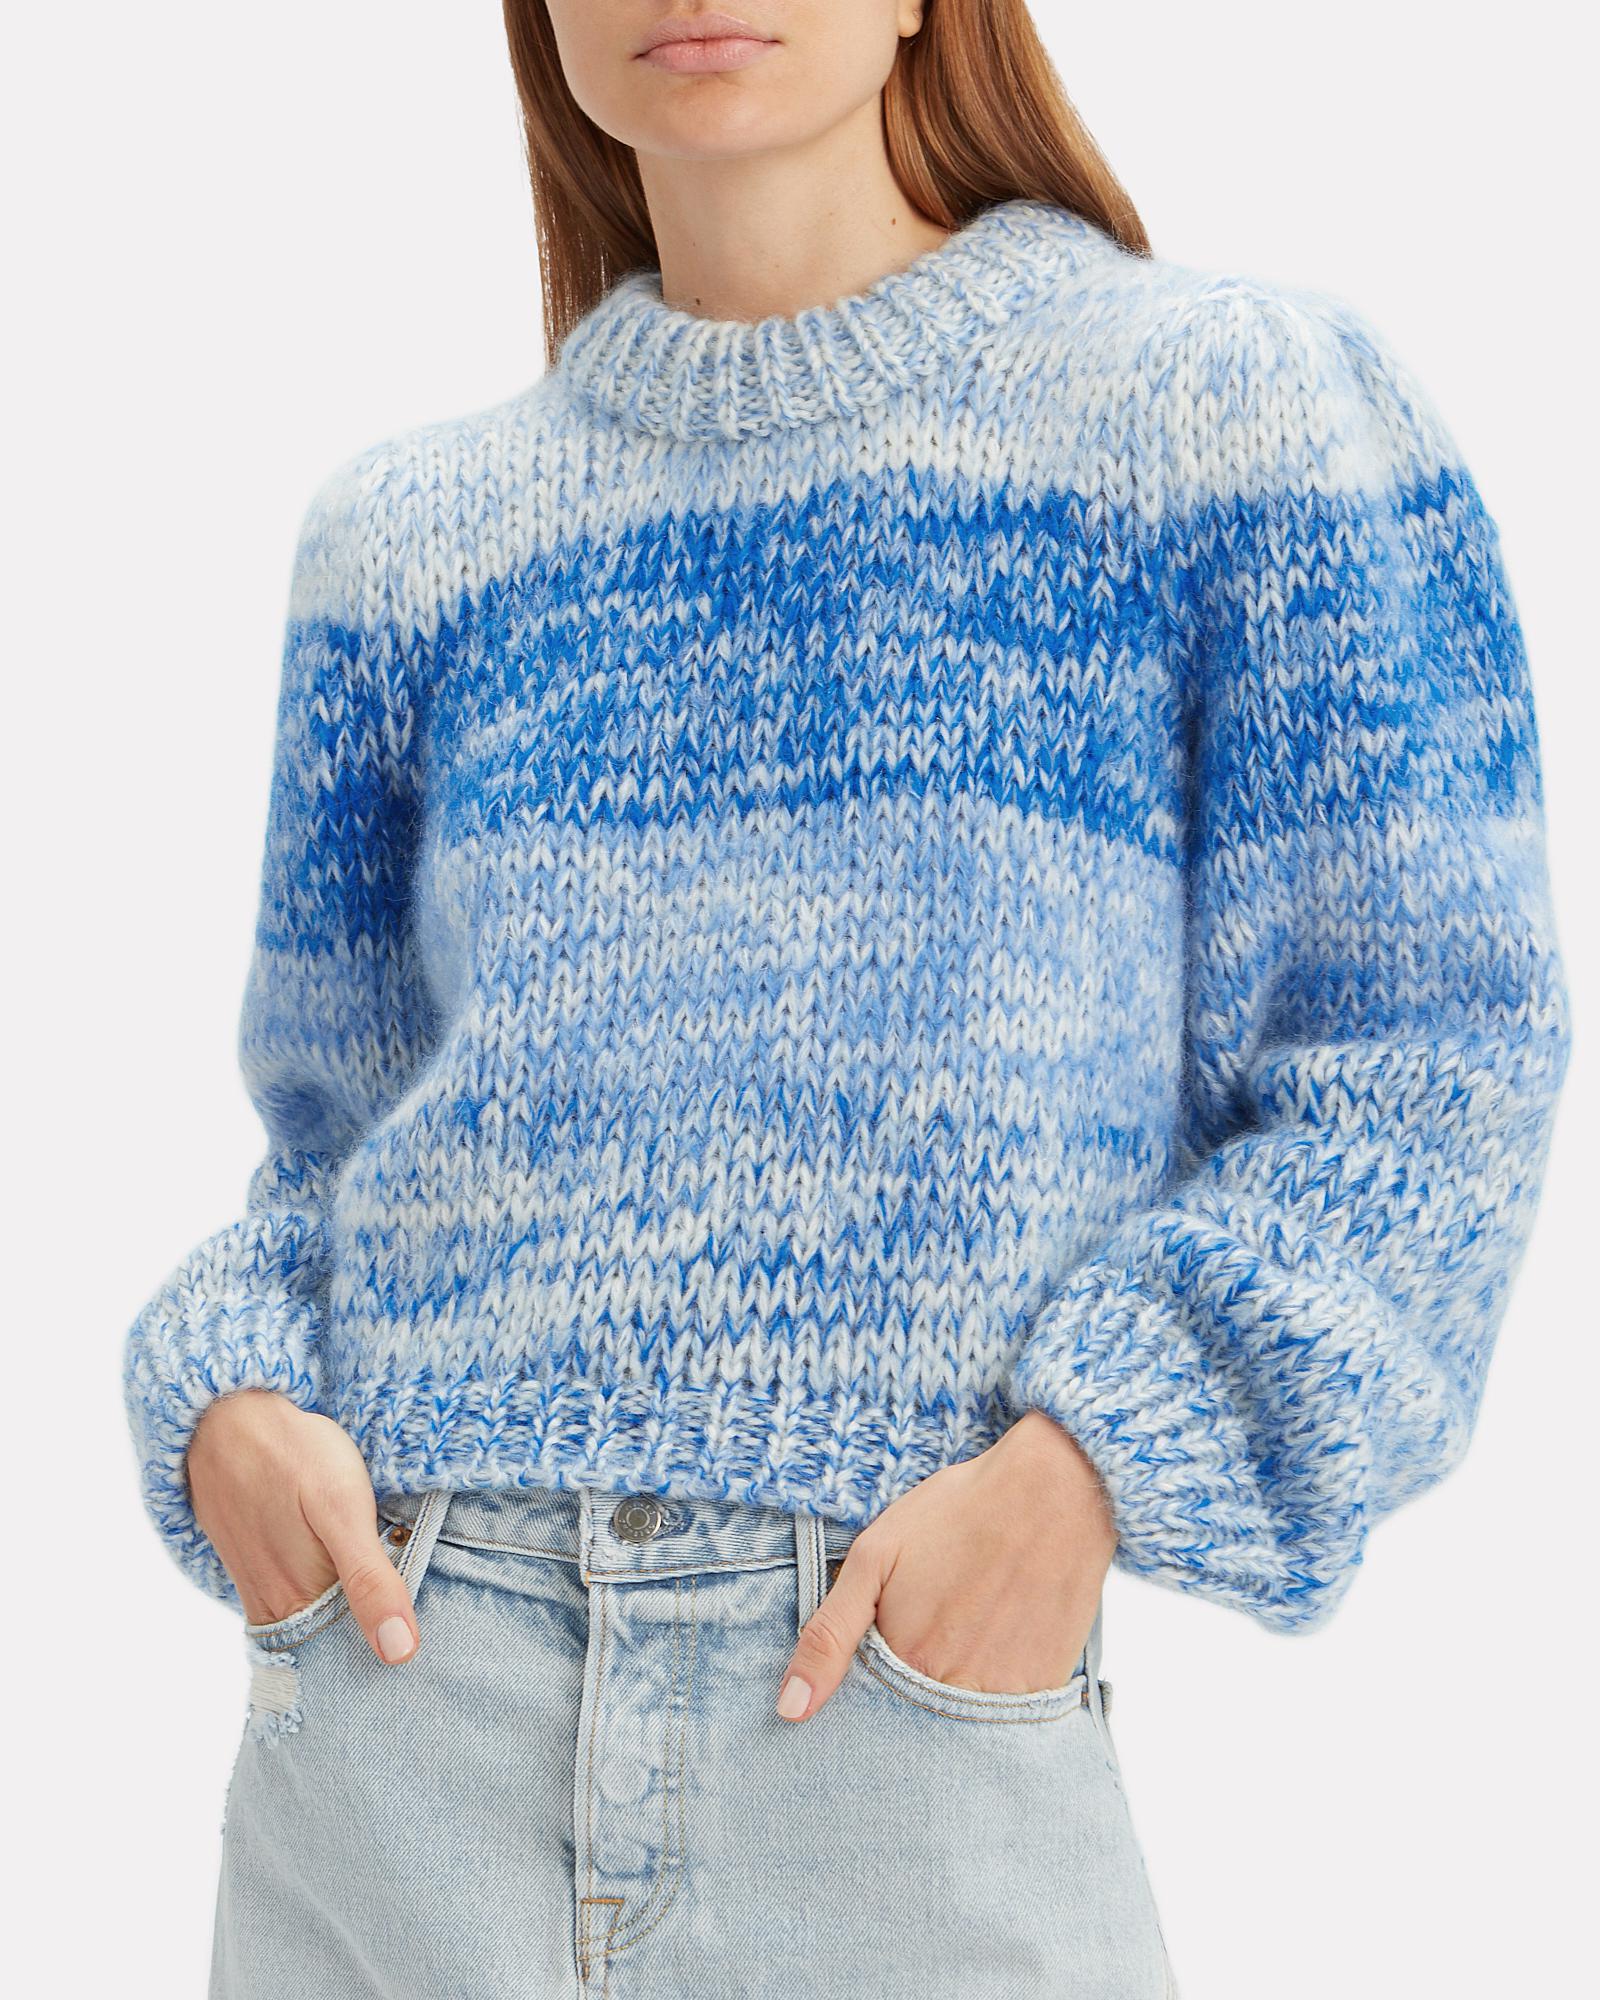 Ganni Julliard Mohair Chunky Knit Sweater in Blue | Lyst